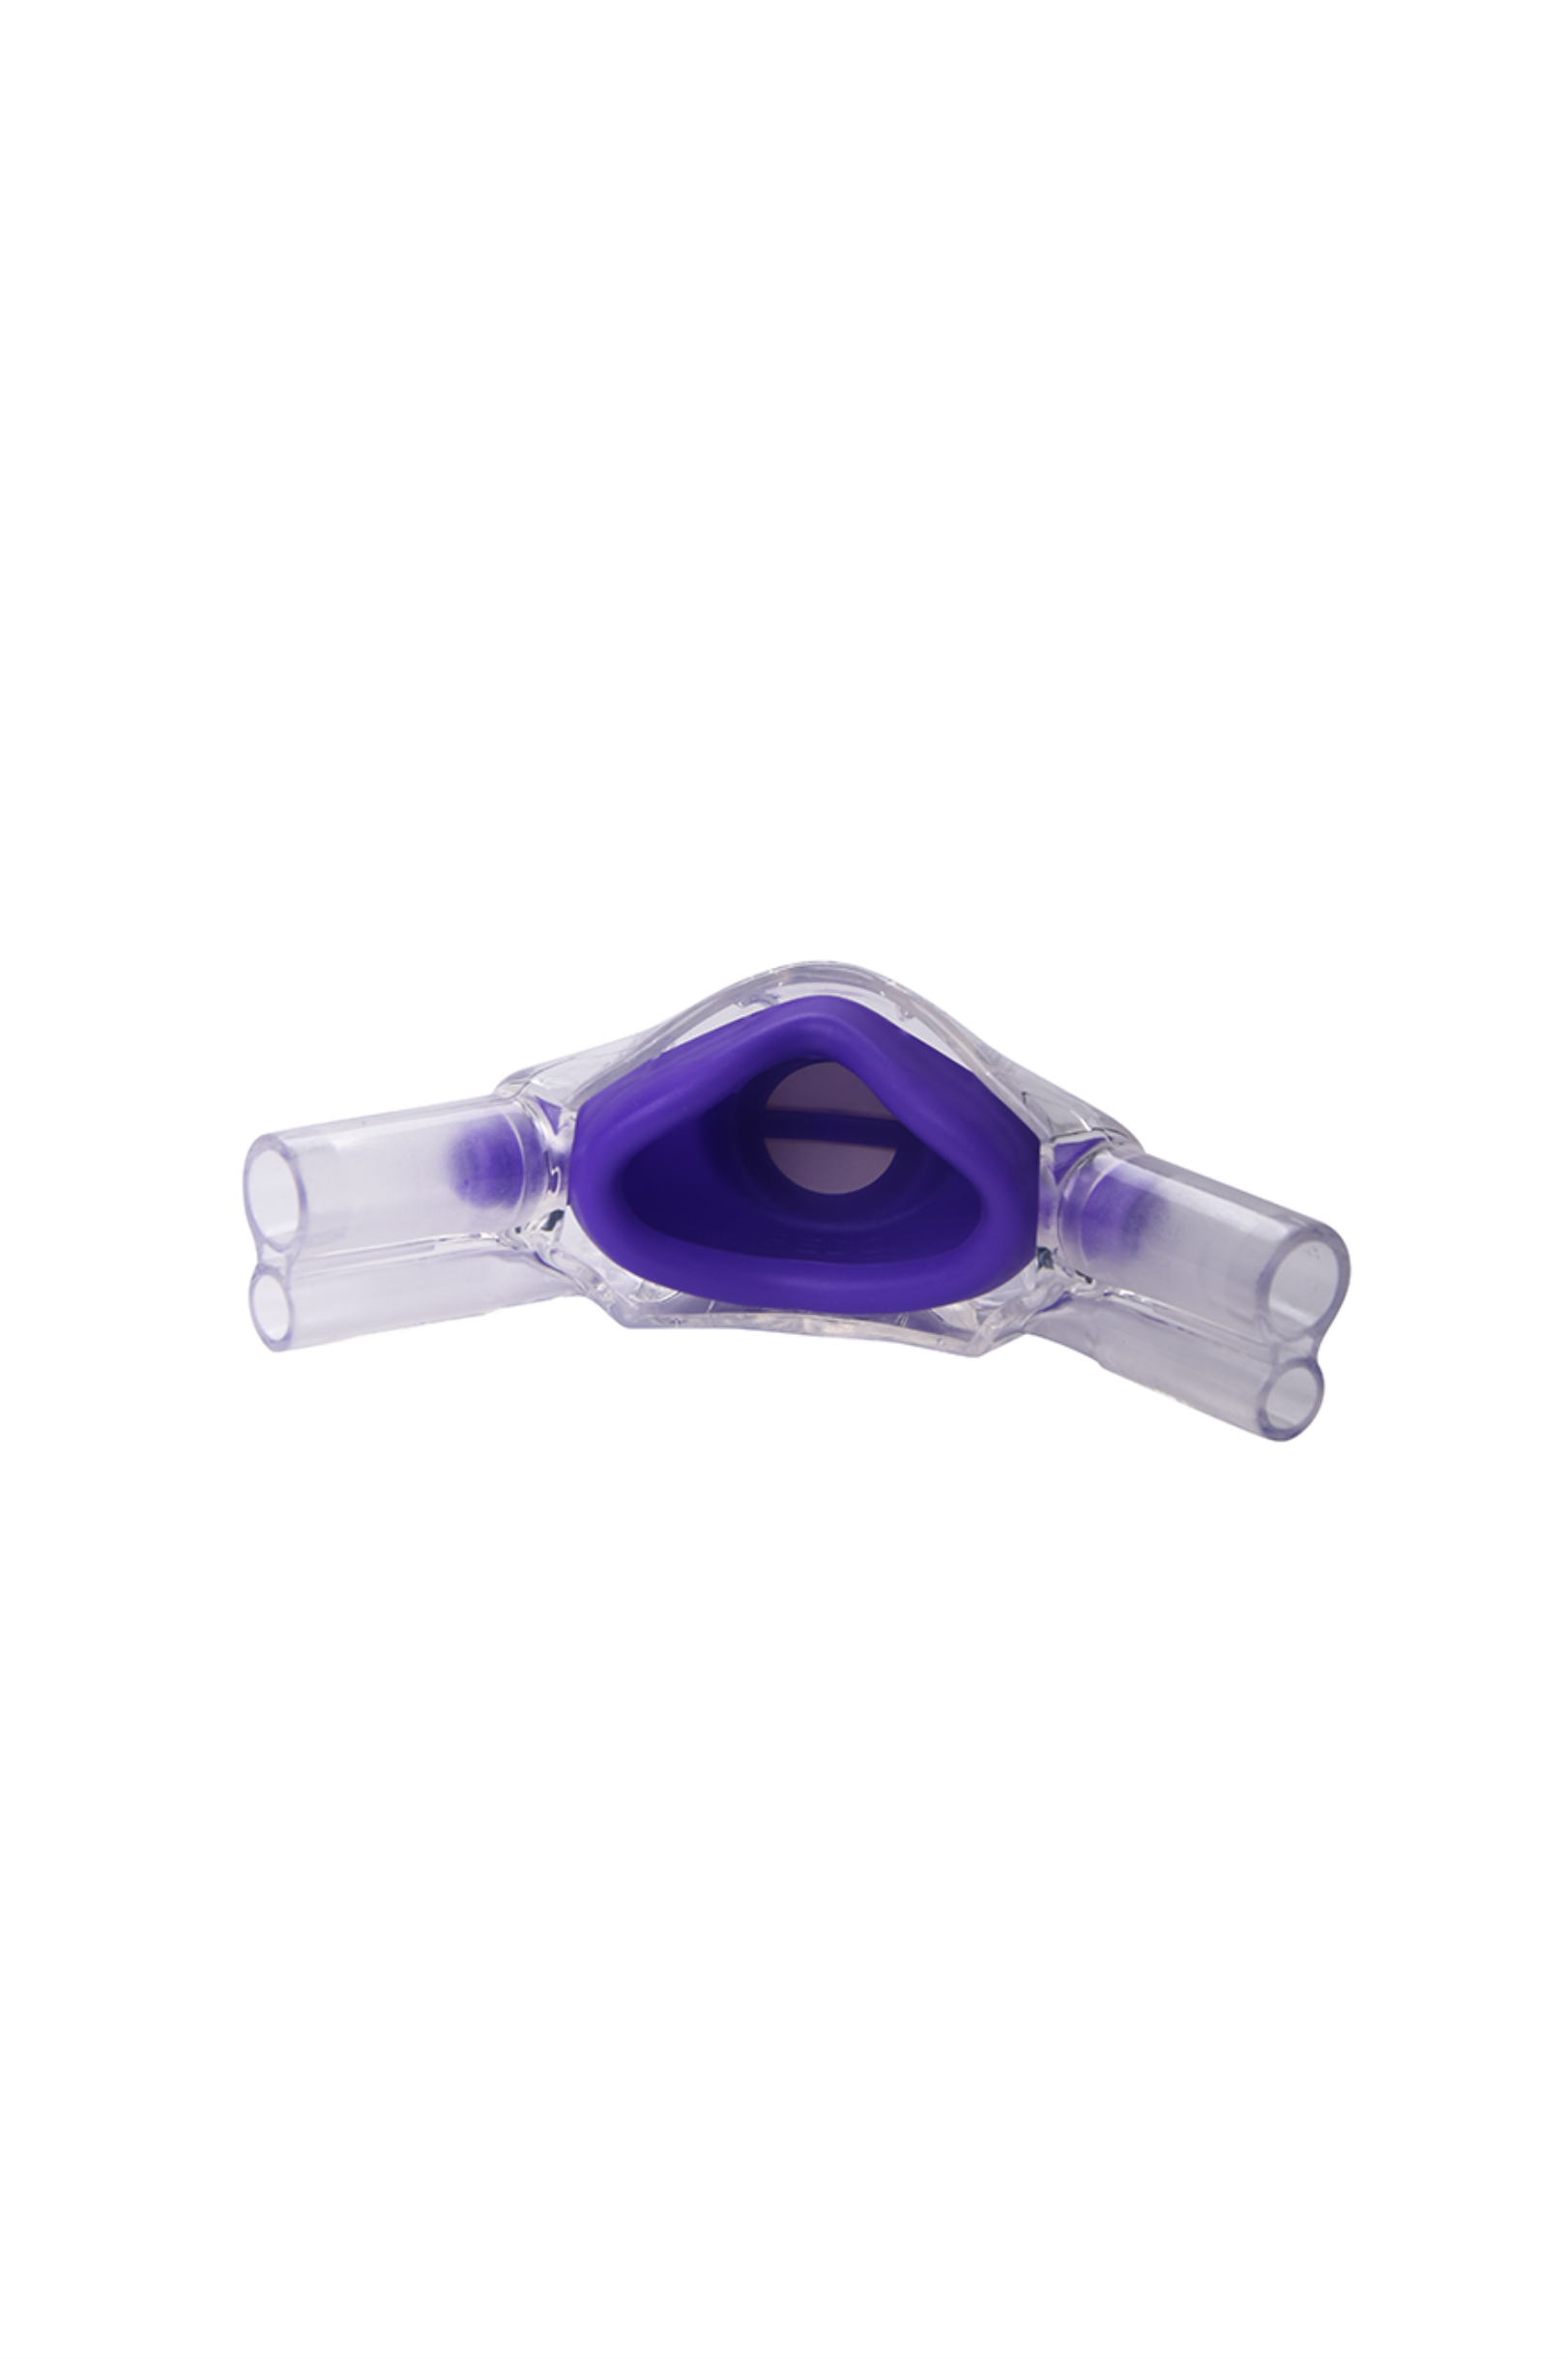 Disposable dubbel neusmaskers Groovy Grape (12 stuks)